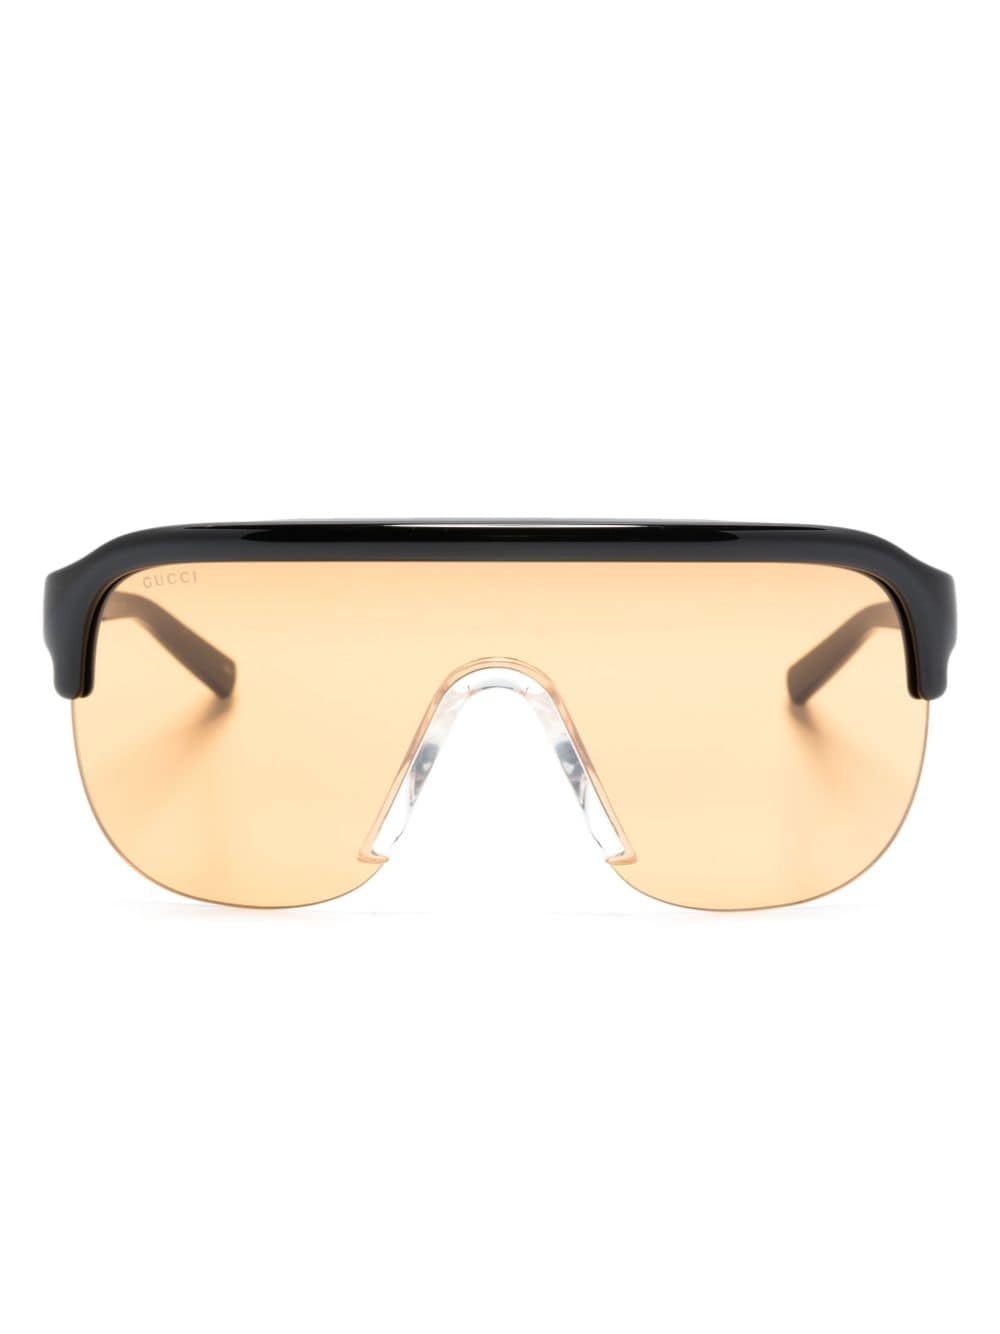 lens-decal shield-frame sunglasses - 1